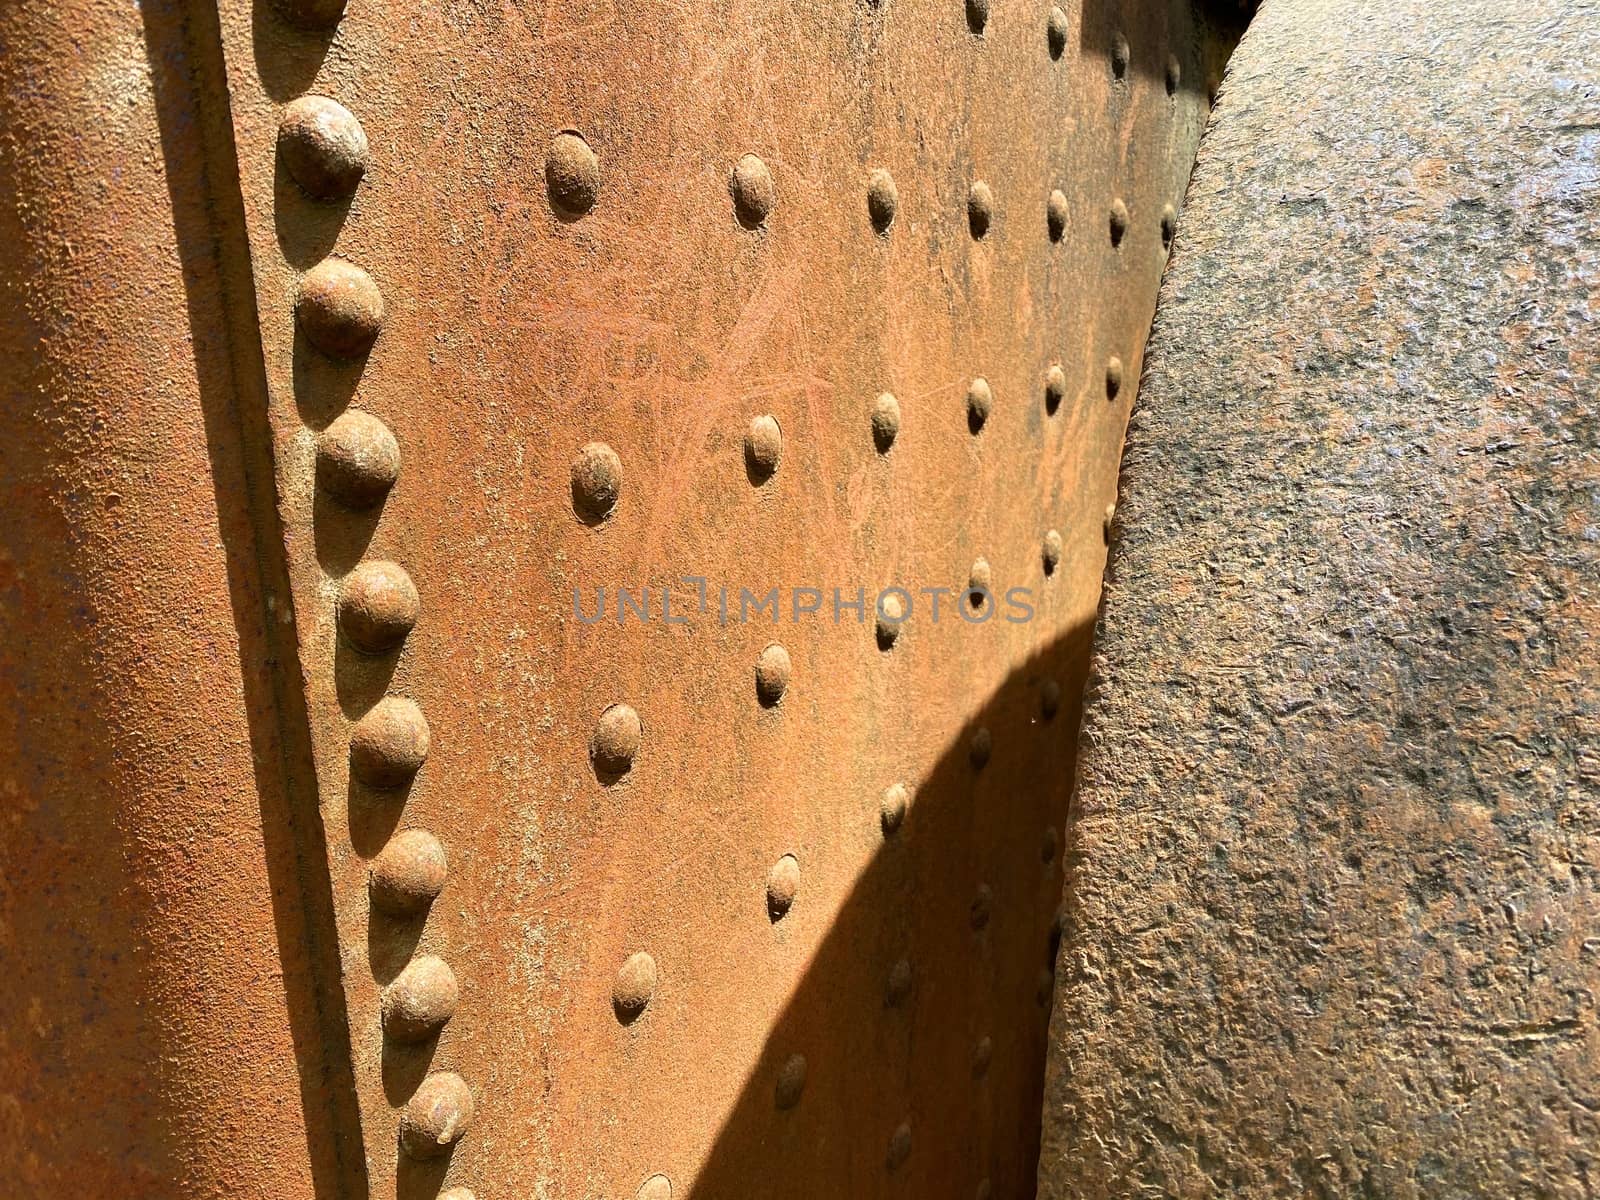 Rusty details of an old machine by Binikins